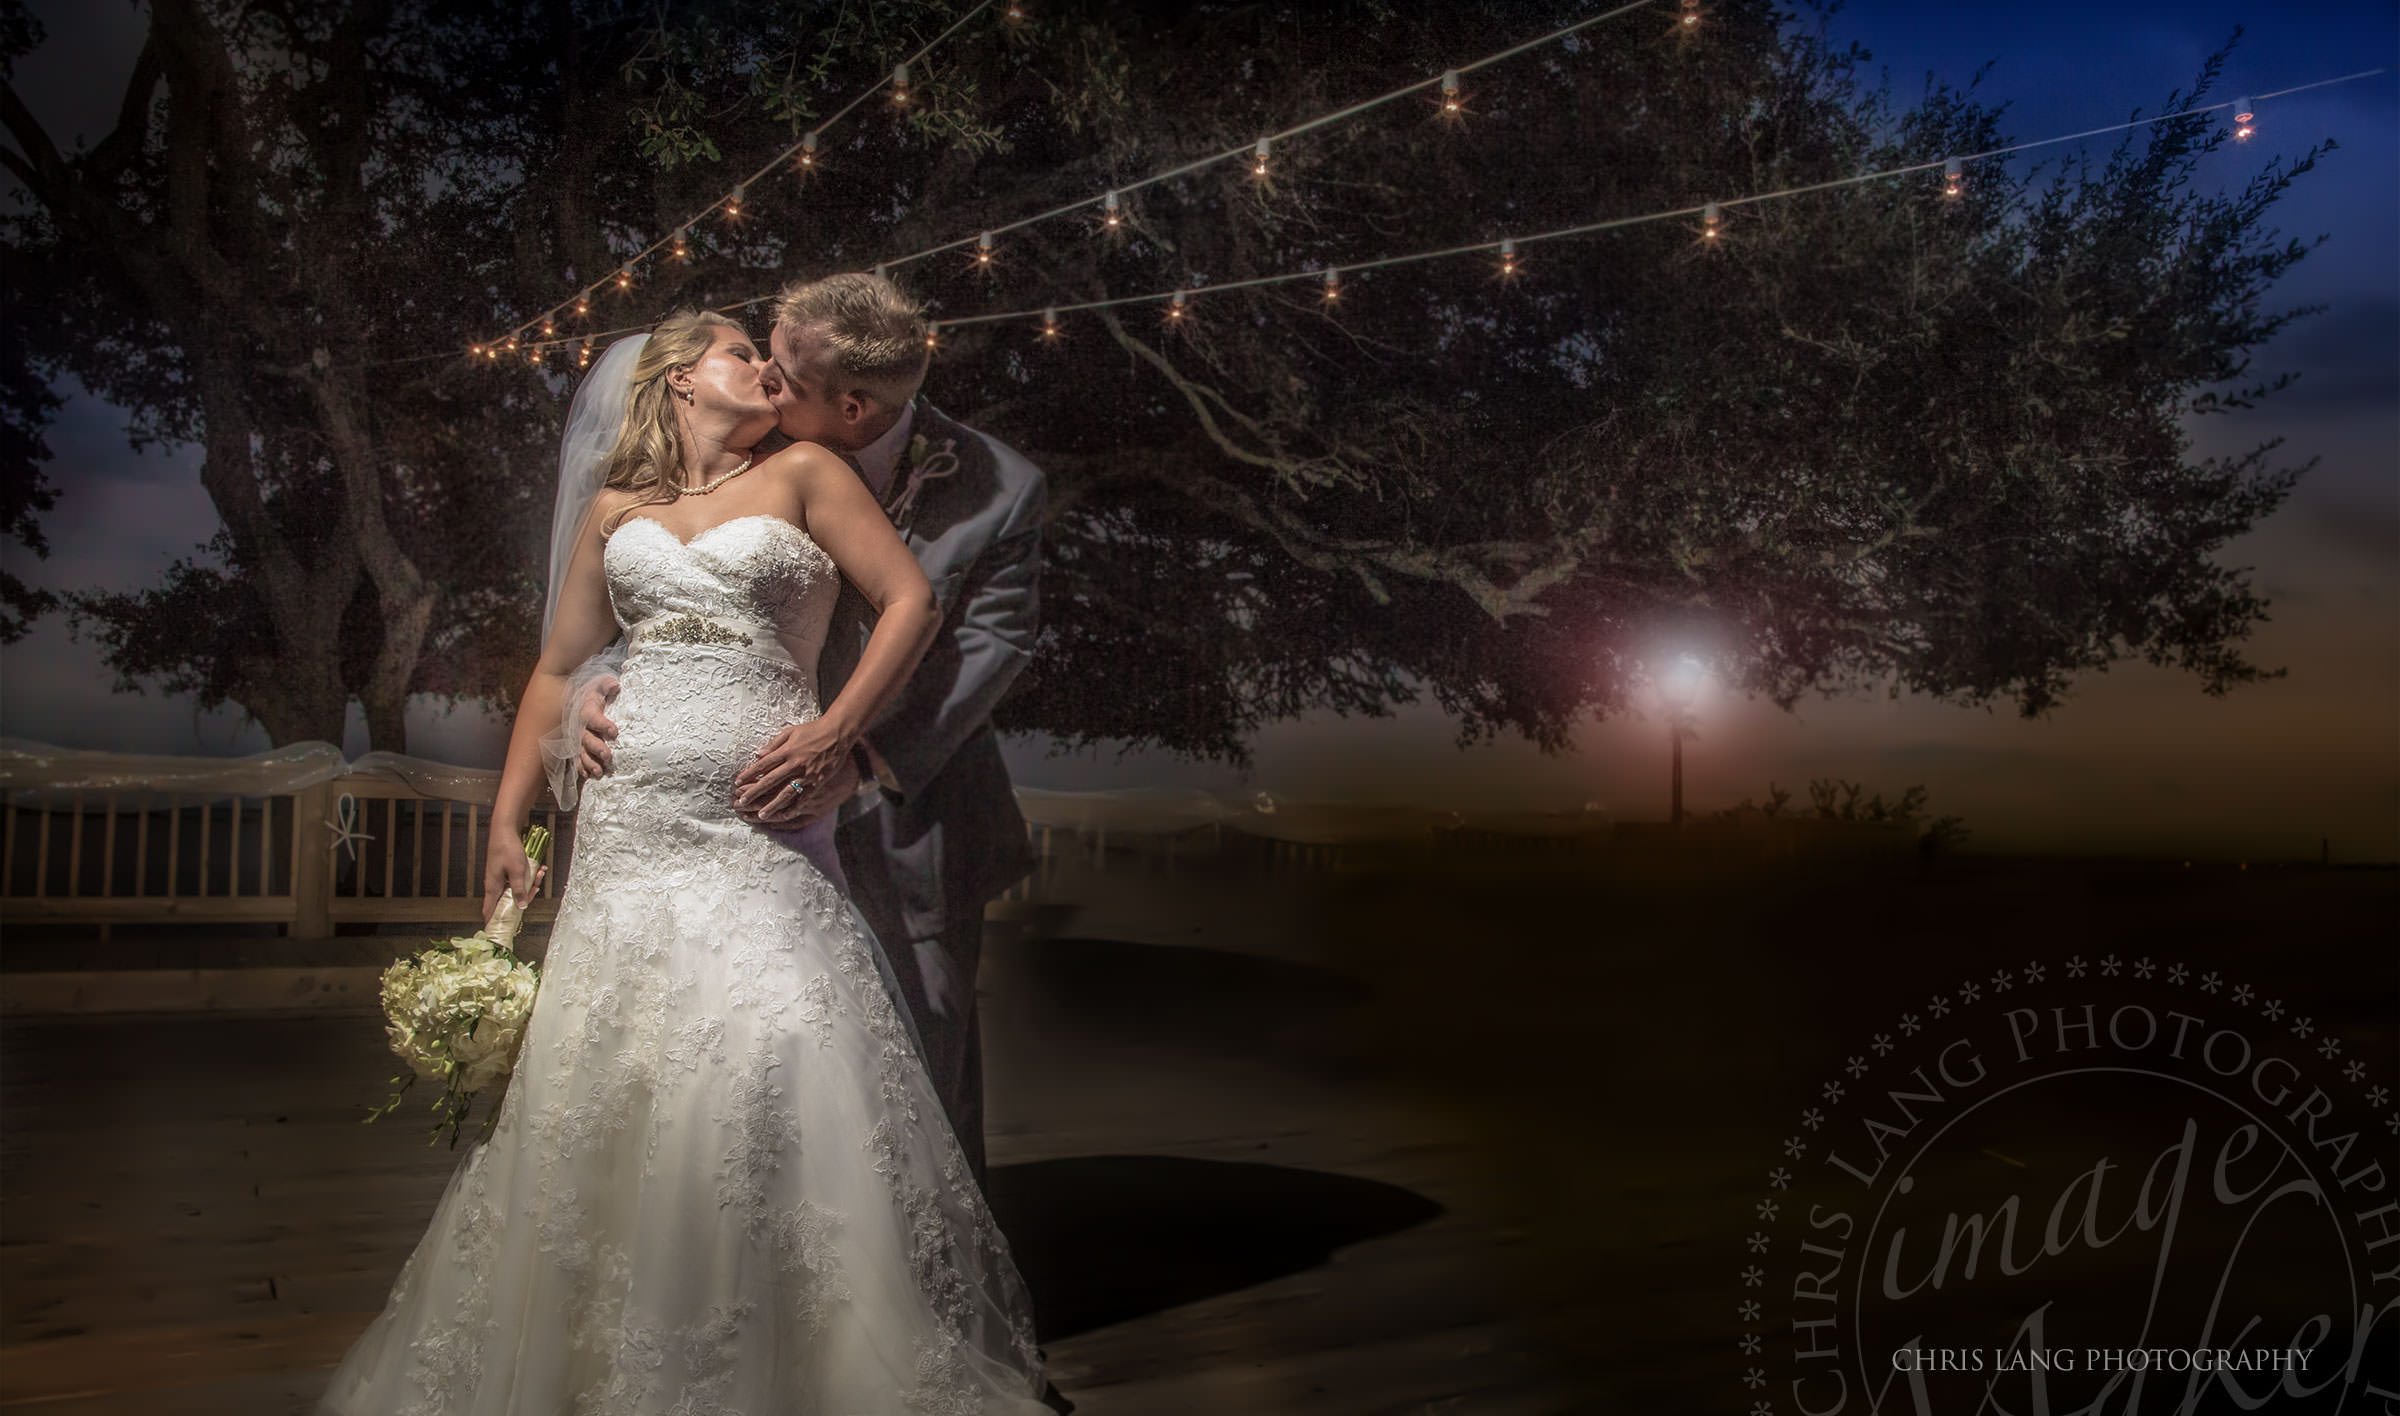 Spouthport Community Center Weddings -Photography-Pictures-Ideas - Southport Wedding Photographers